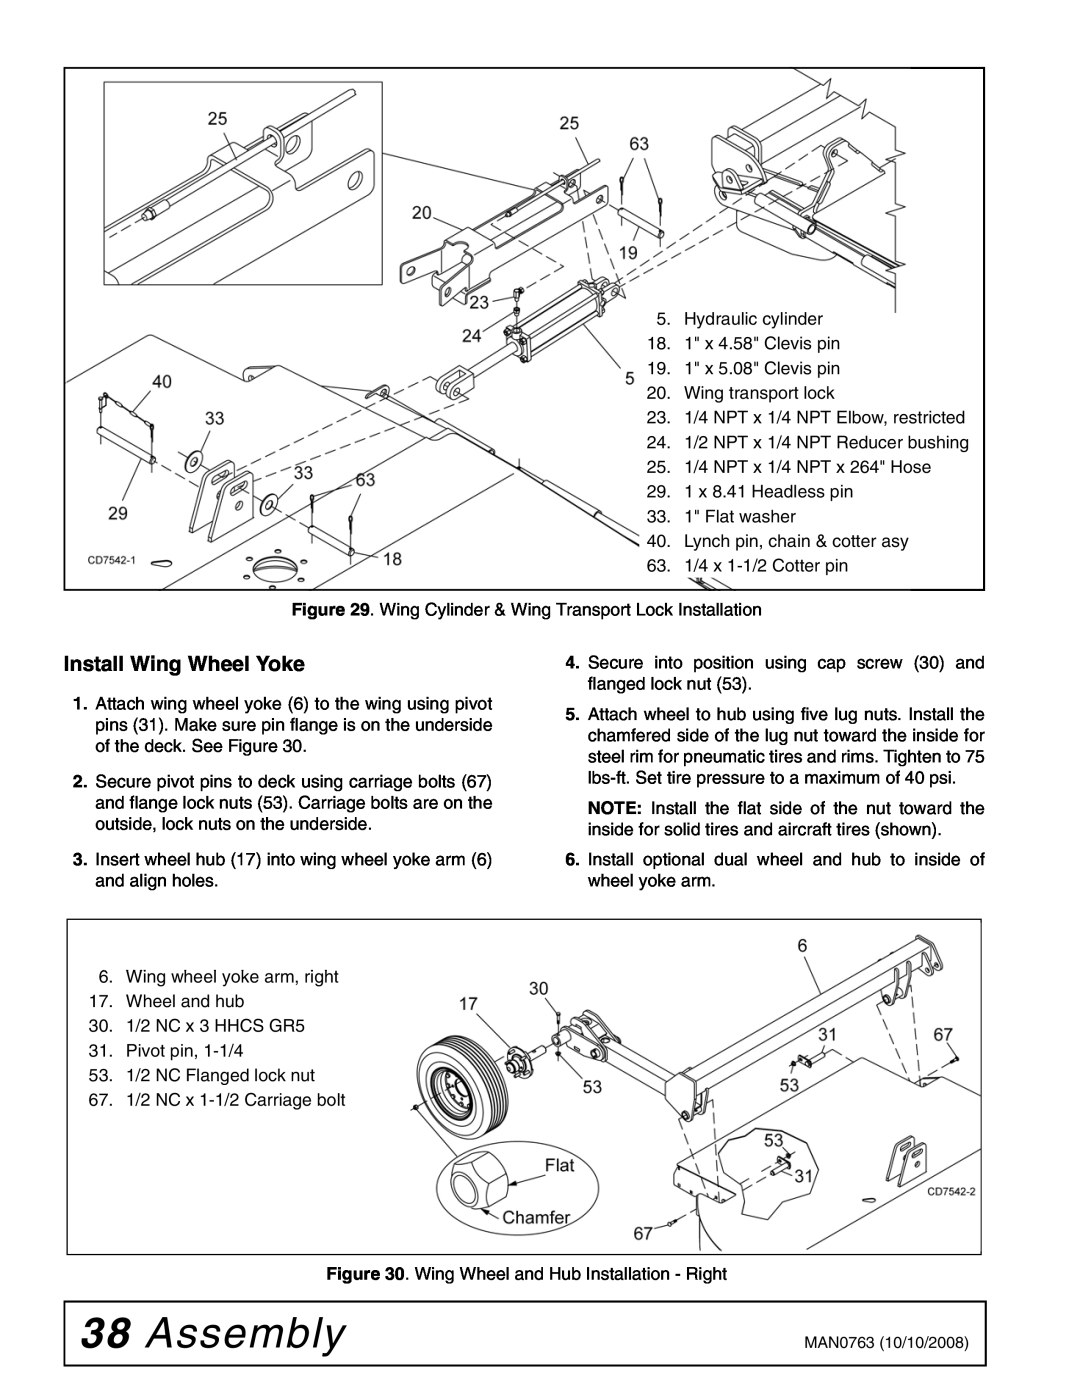 Woods Equipment BW240HDQ manual Assembly, Install Wing Wheel Yoke 